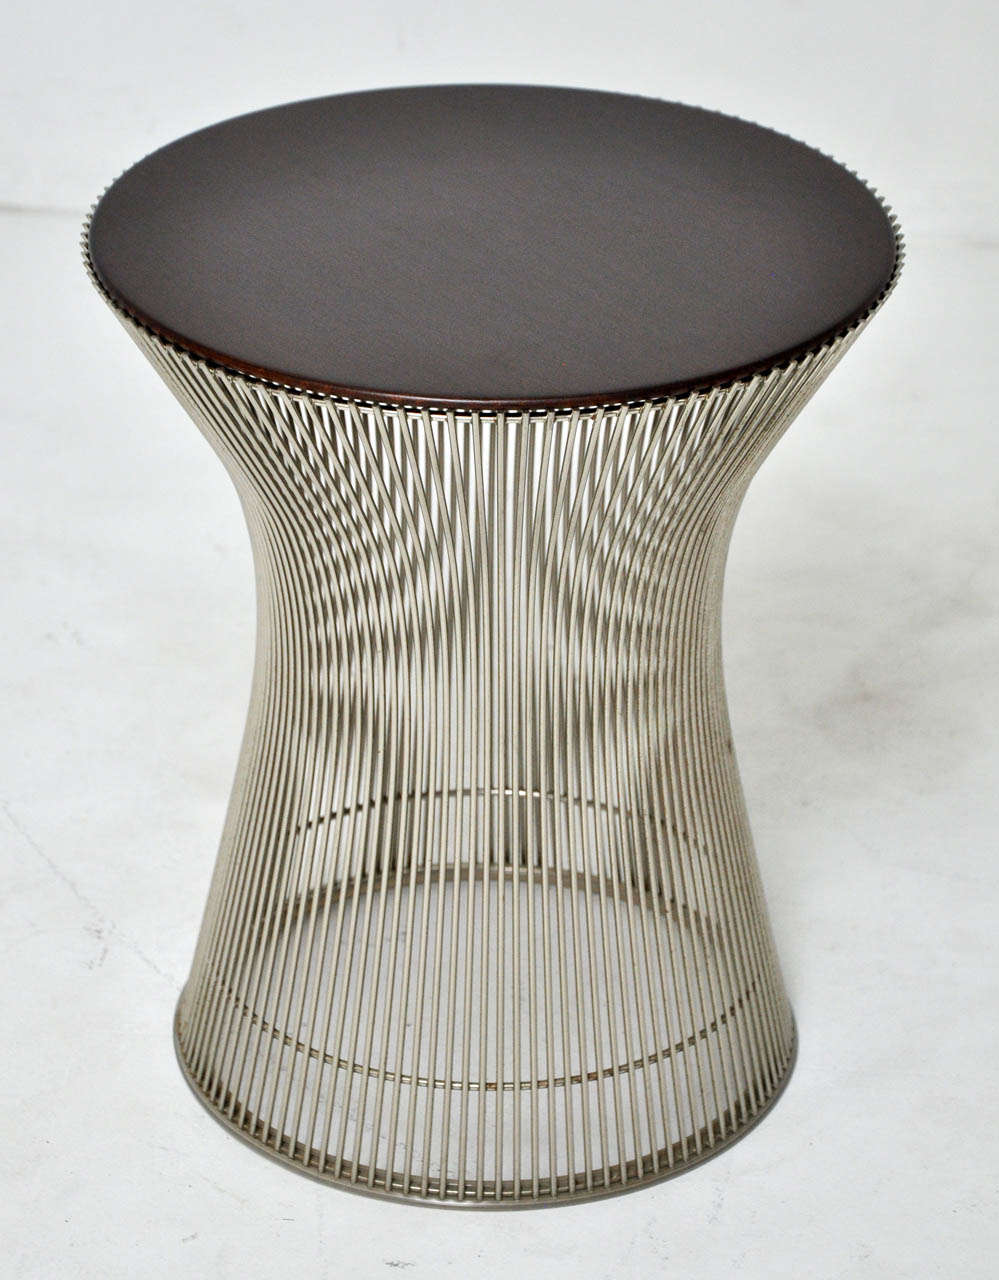 Nickel frame side table with refinished dark walnut top. Designed by Warren Platner for Knoll.